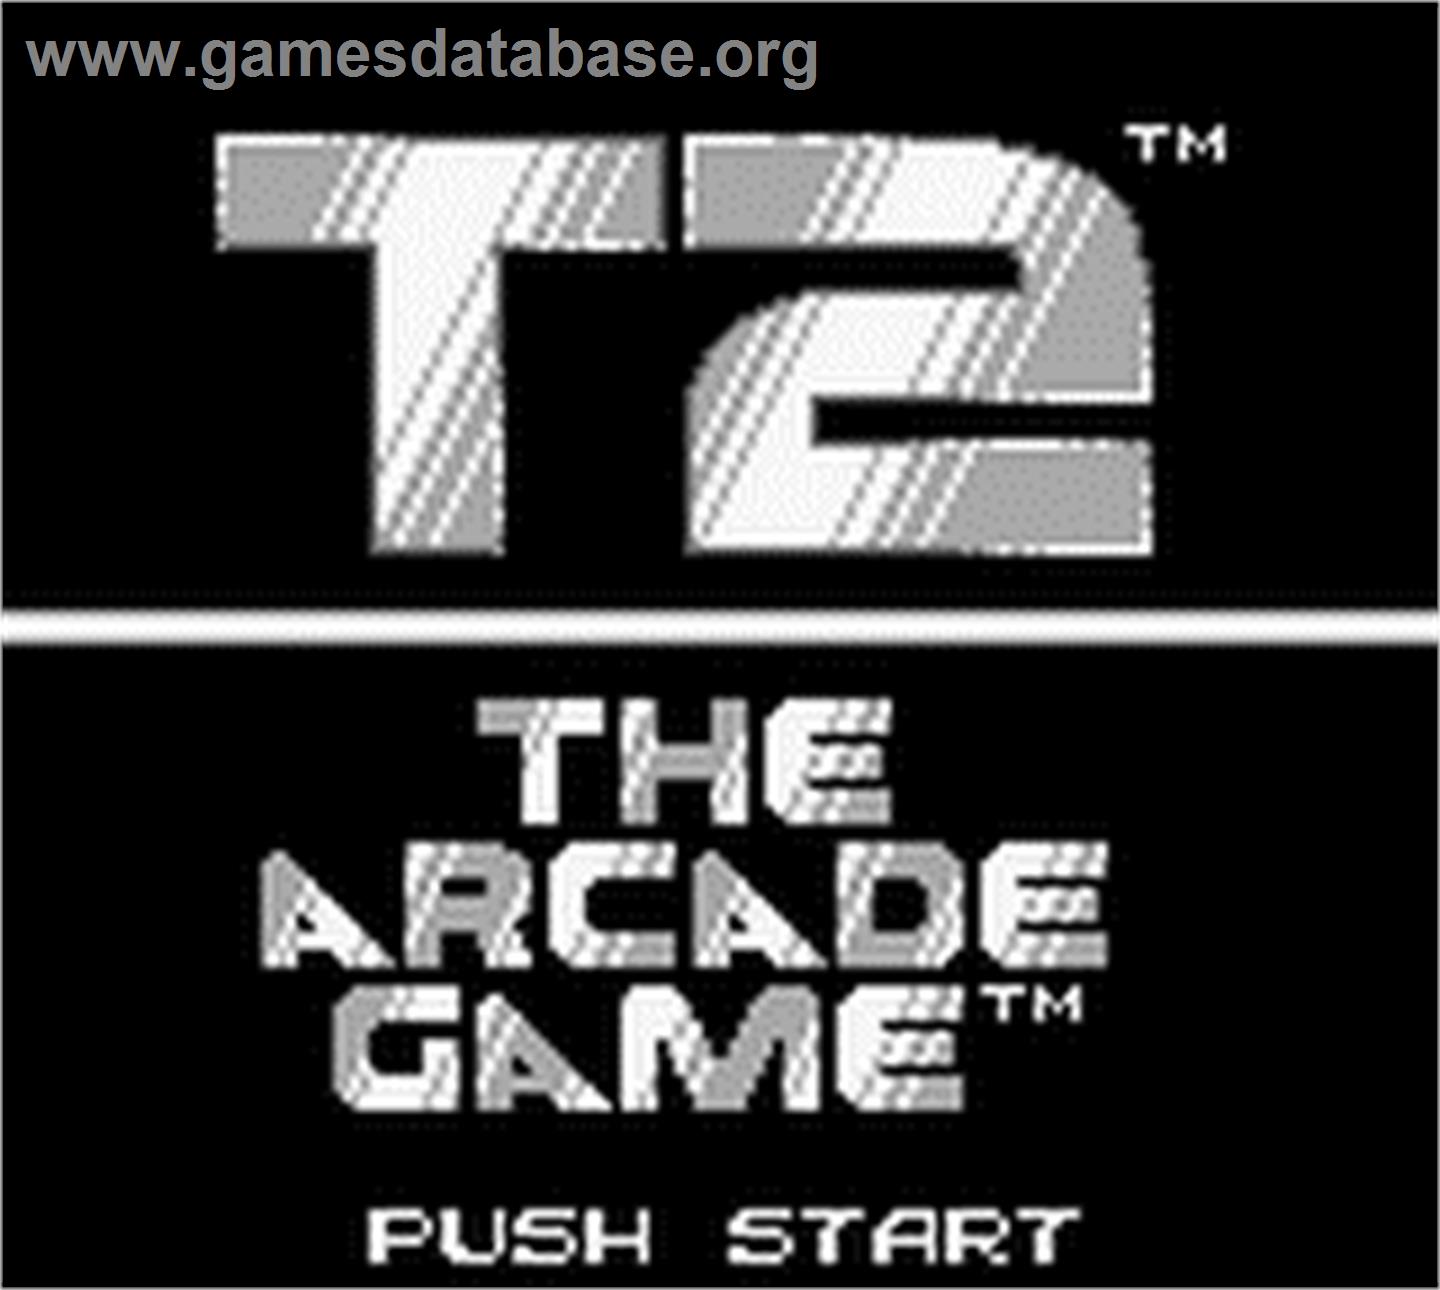 Terminator 2 - Judgment Day - Nintendo Game Boy - Artwork - Title Screen